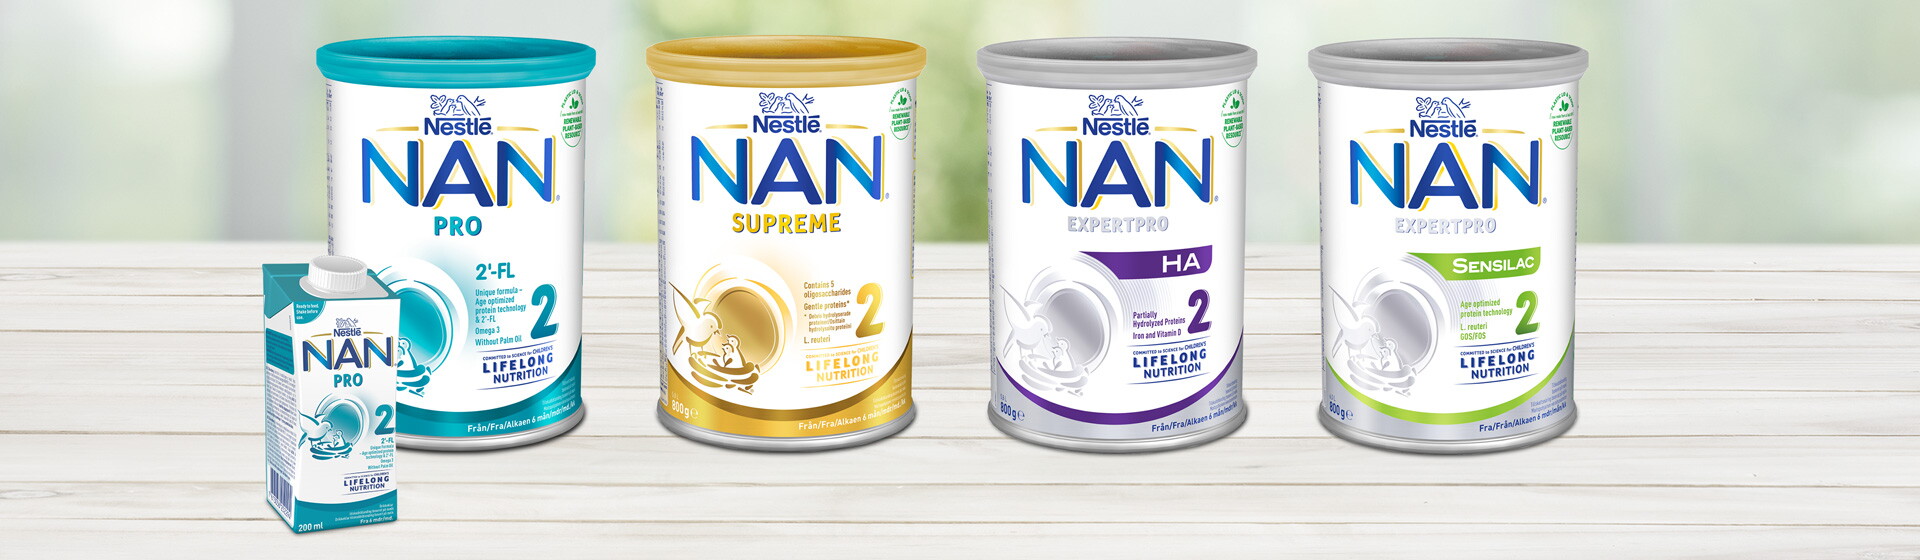 NAN Products